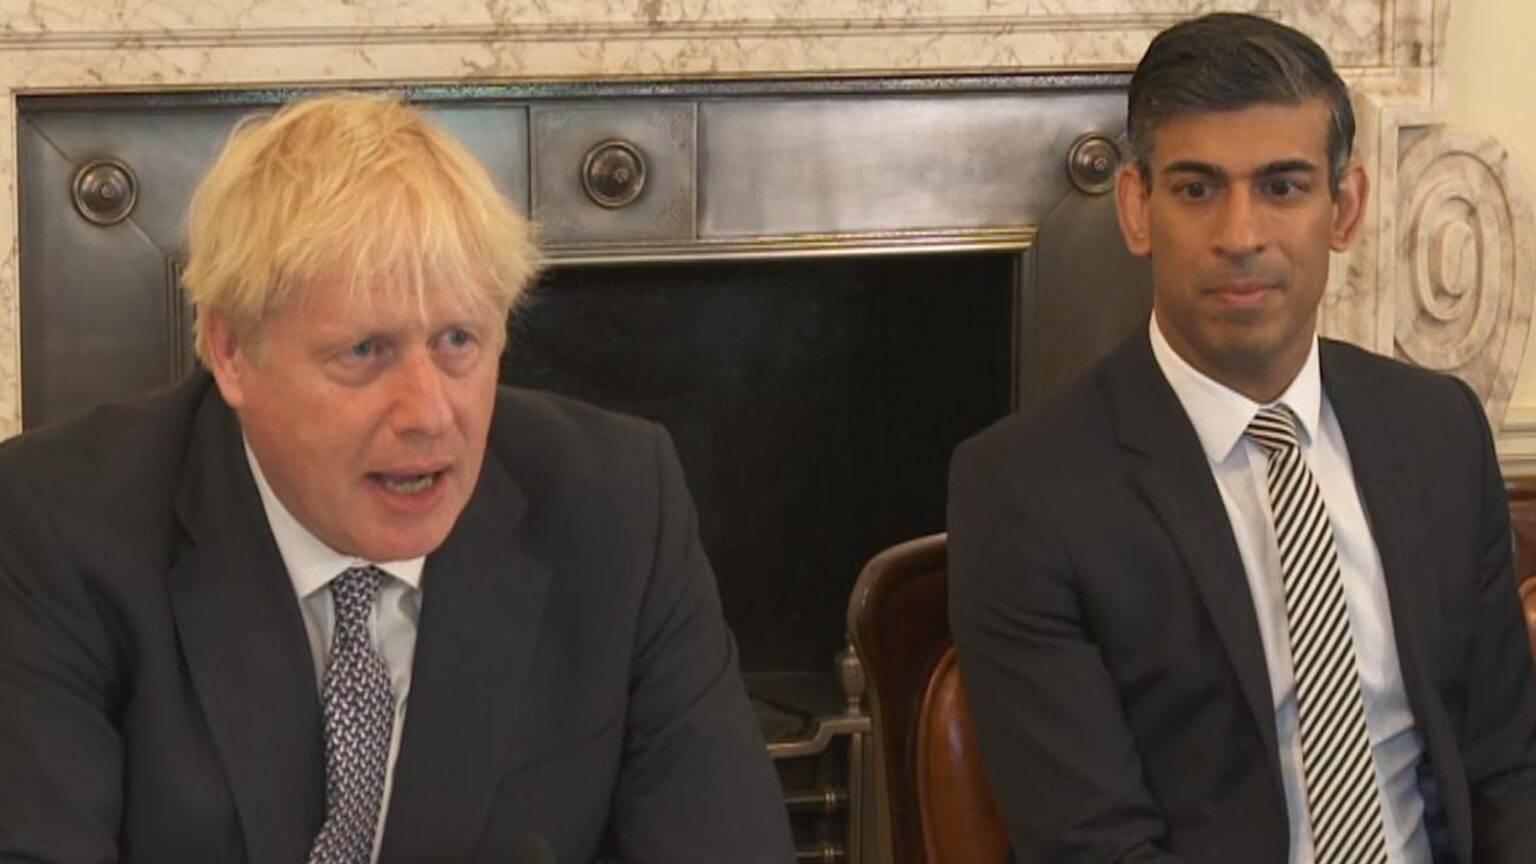 Boris Johnson asked me to overrule peer vetting, says Rishi Sunak